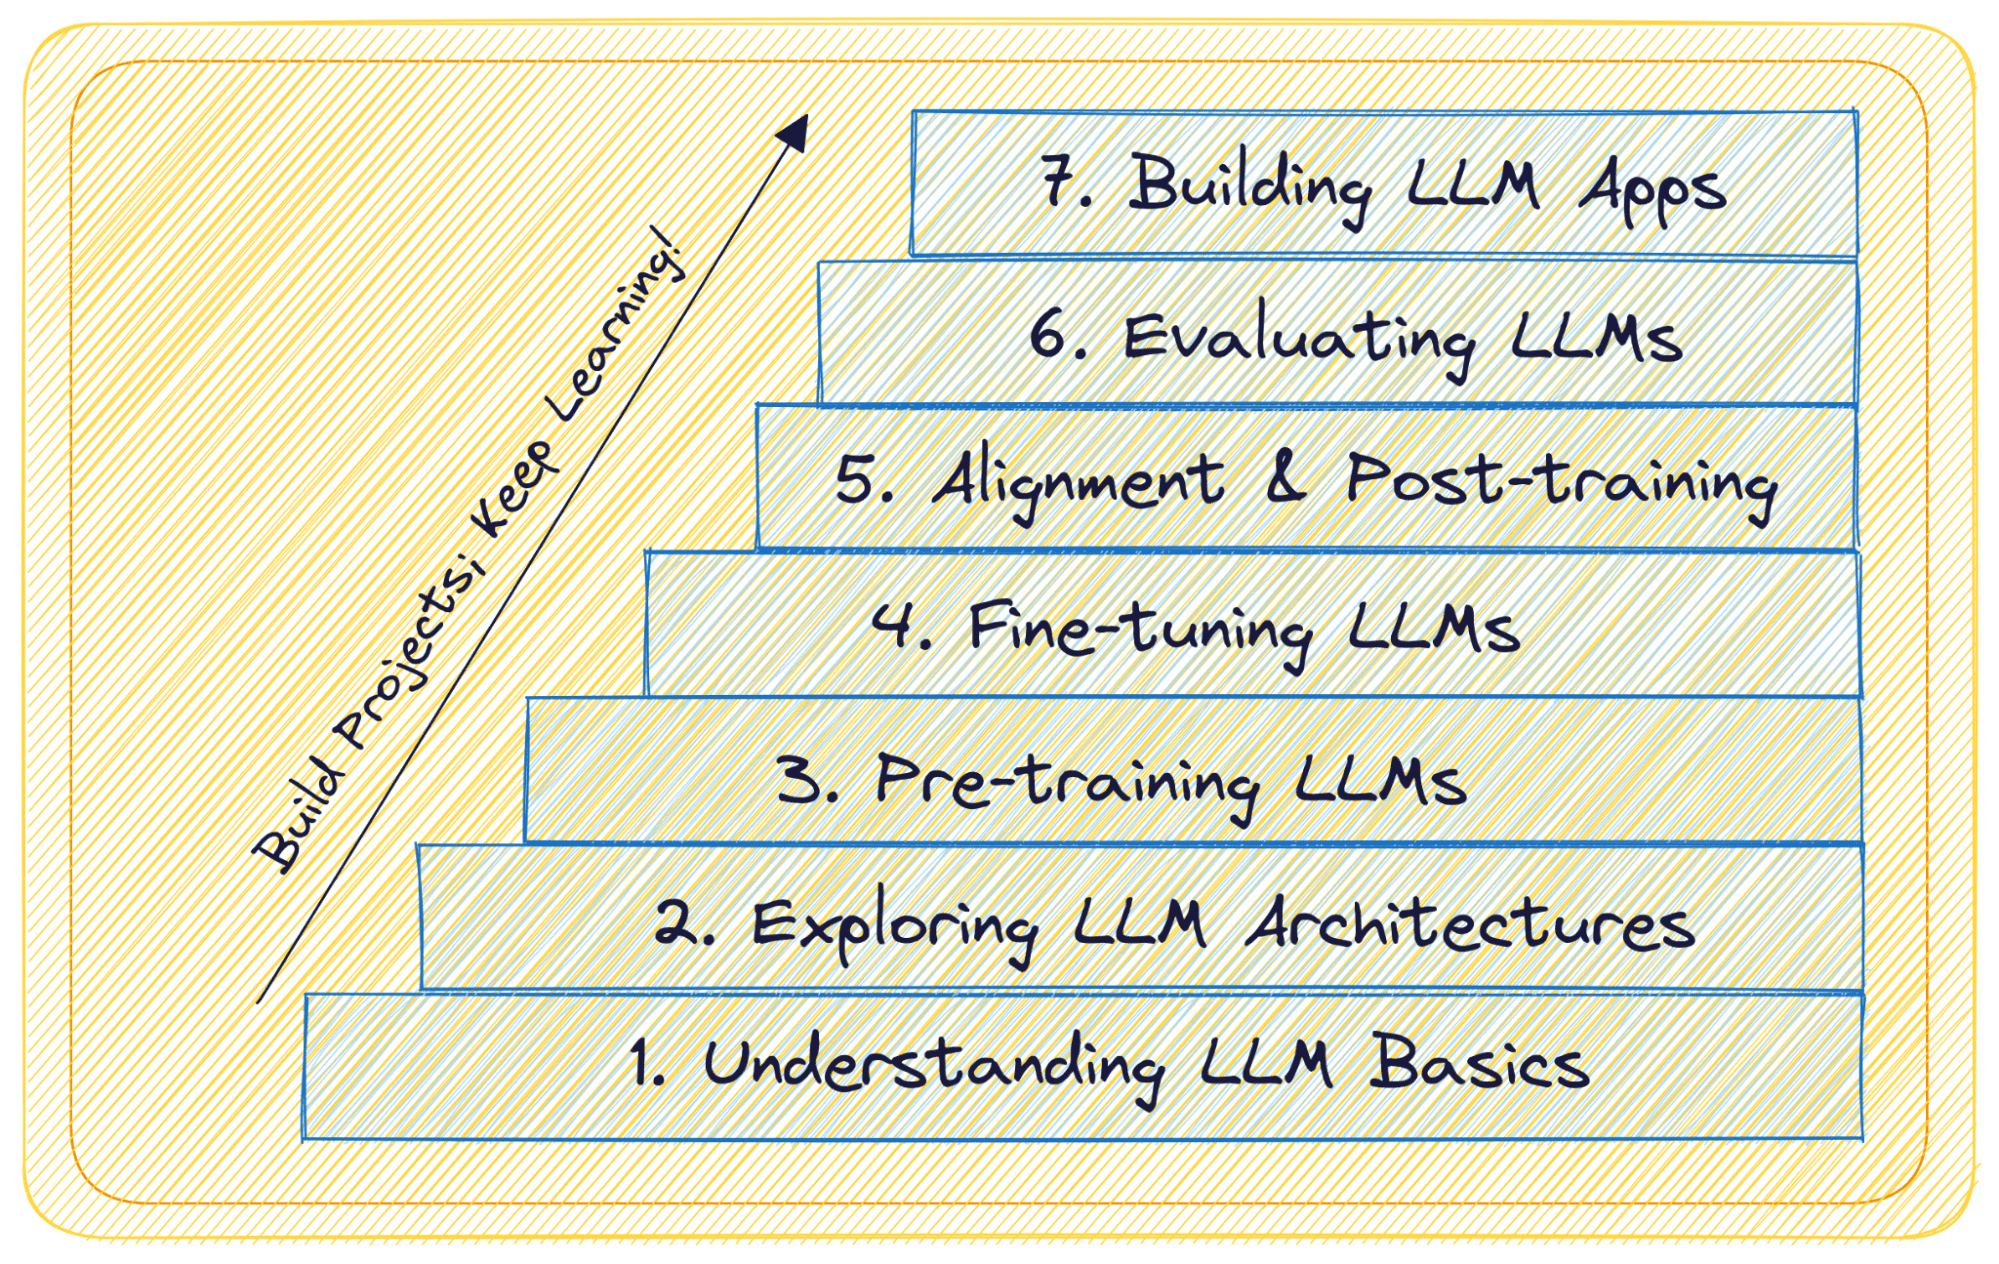 7 Steps to Mastering Large Language Models (LLMs)